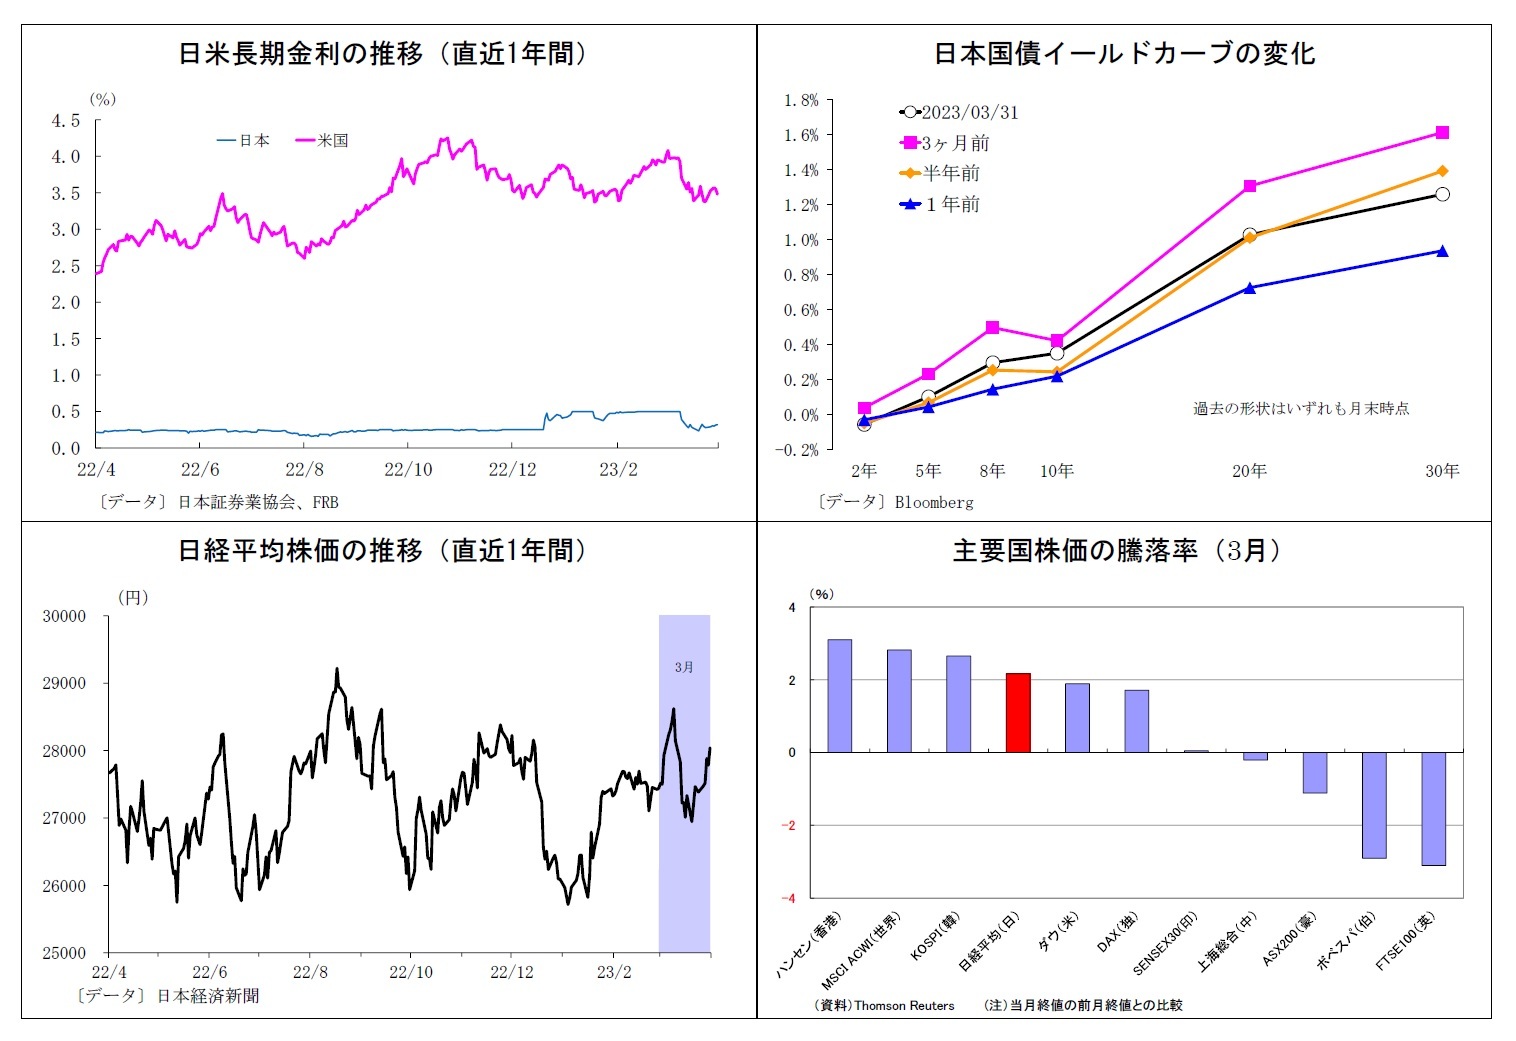 日米長期金利の推移（直近1年間）/日本国債イールドカーブの変化/日経平均株価の推移（直近1年間）/主要国株価の騰落率（3月）